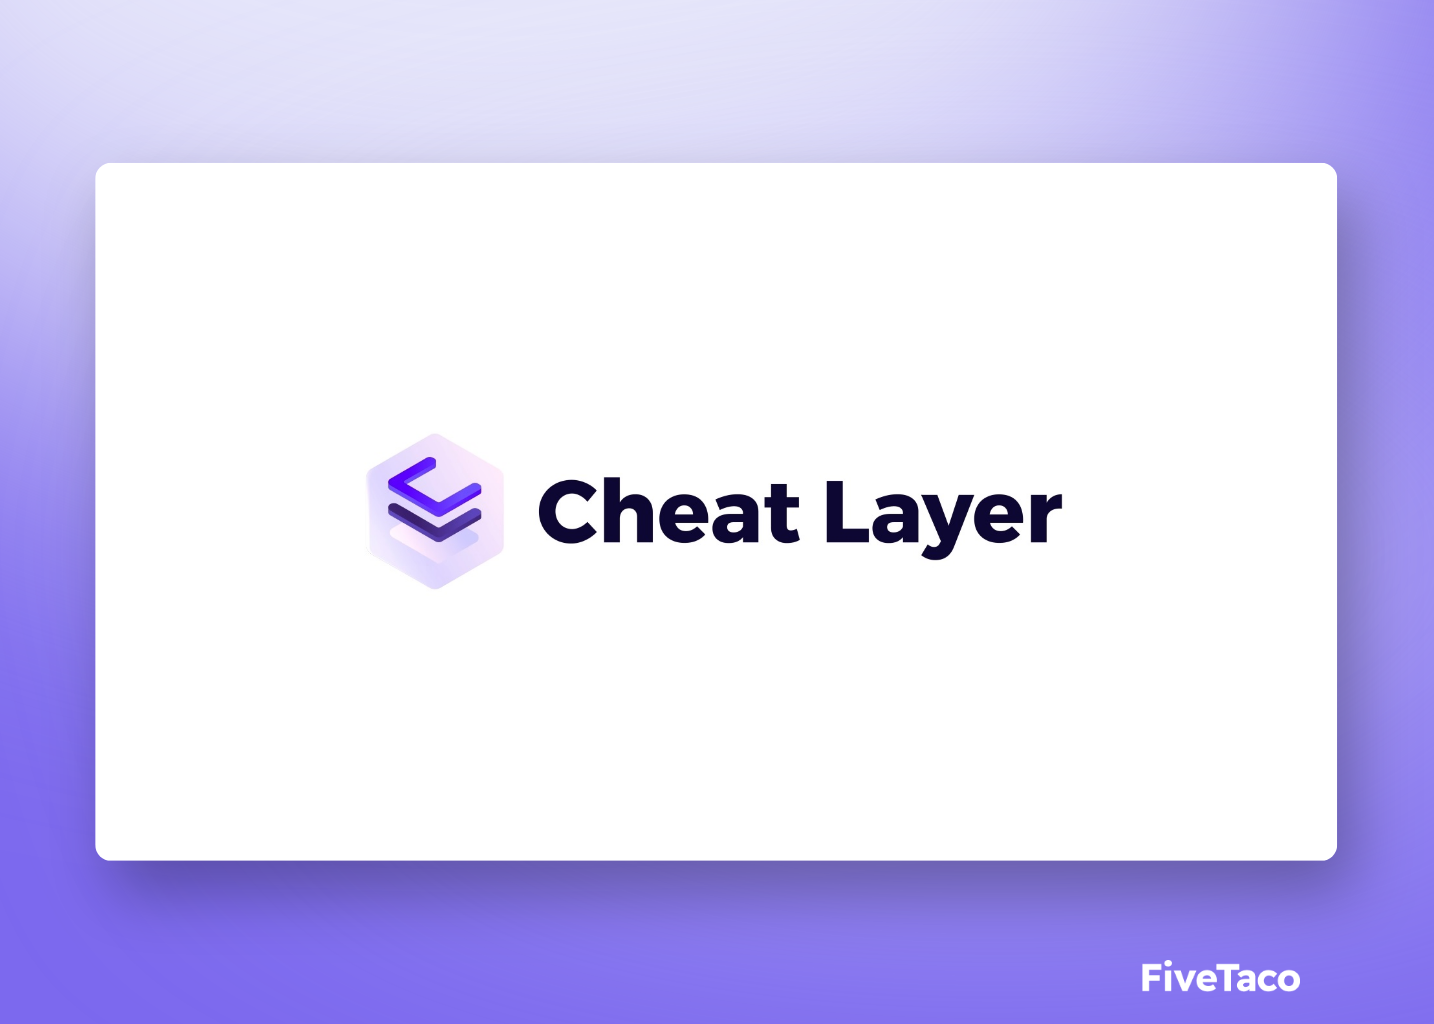 Cheat Layer